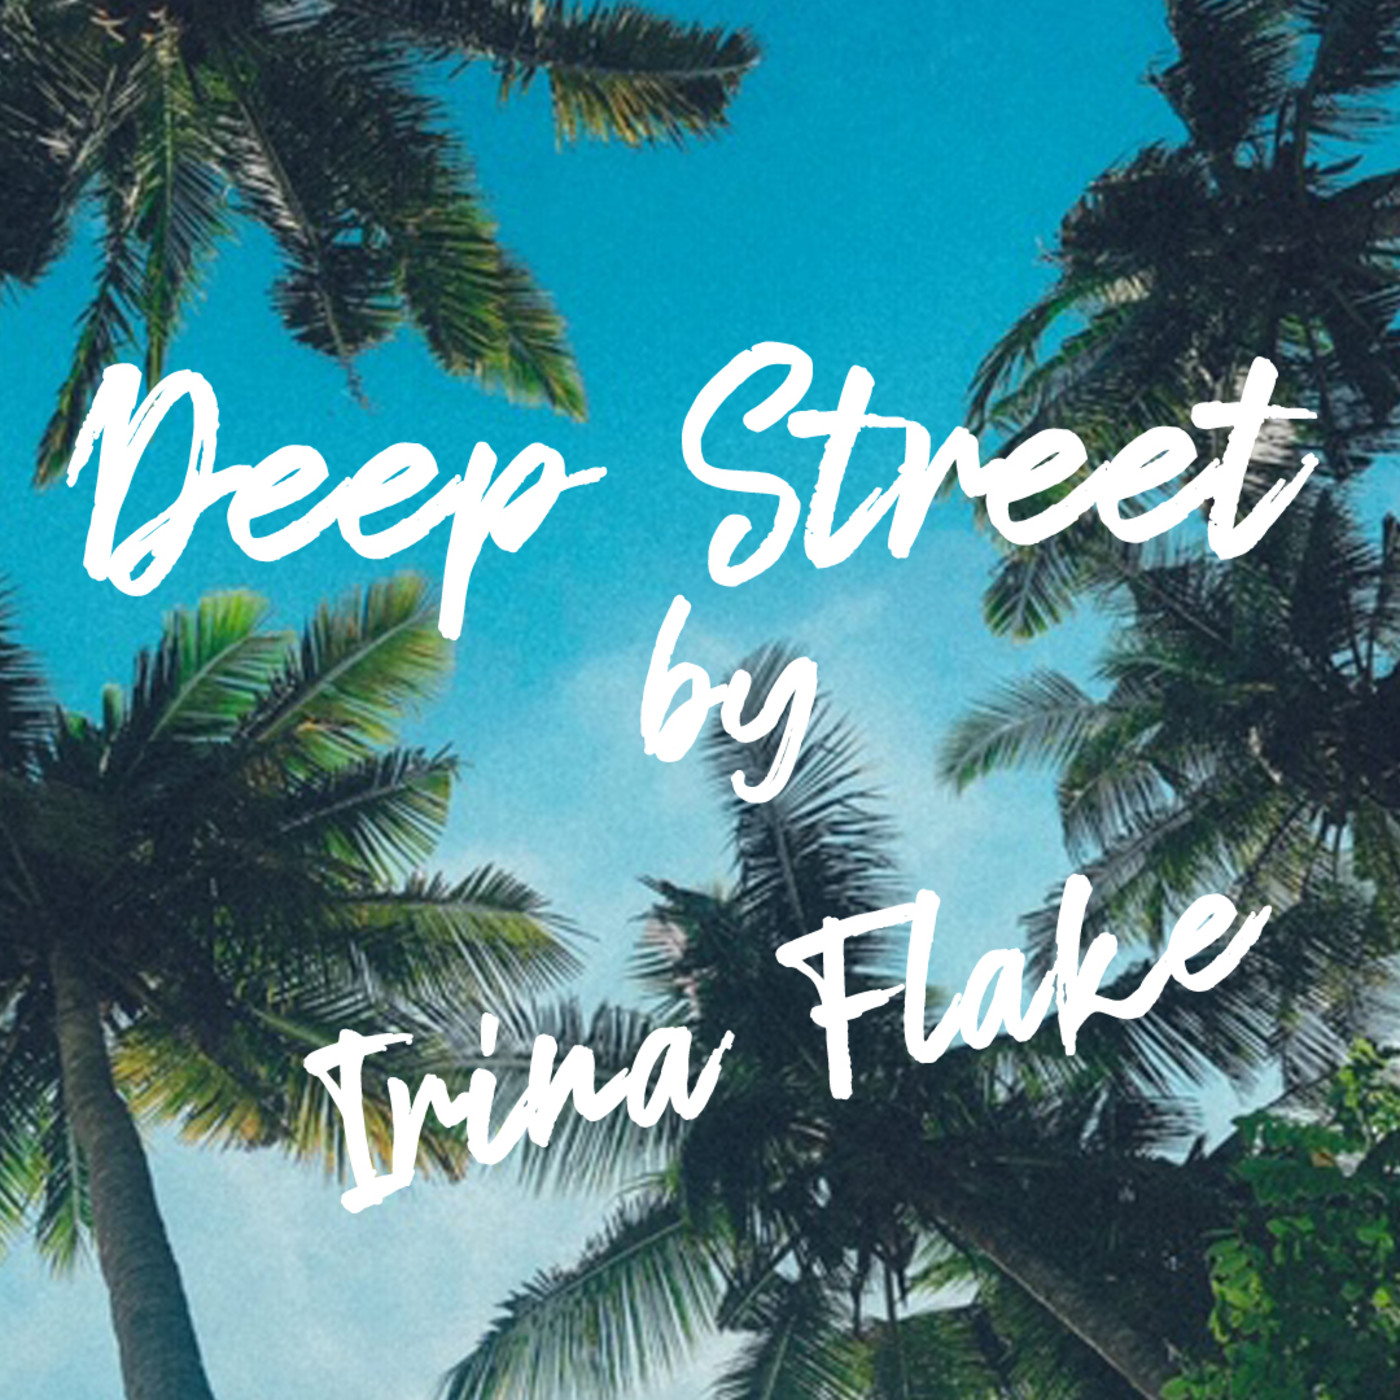 Deep Street by Irina Flake 15 @ Flaix FM 14.07.19